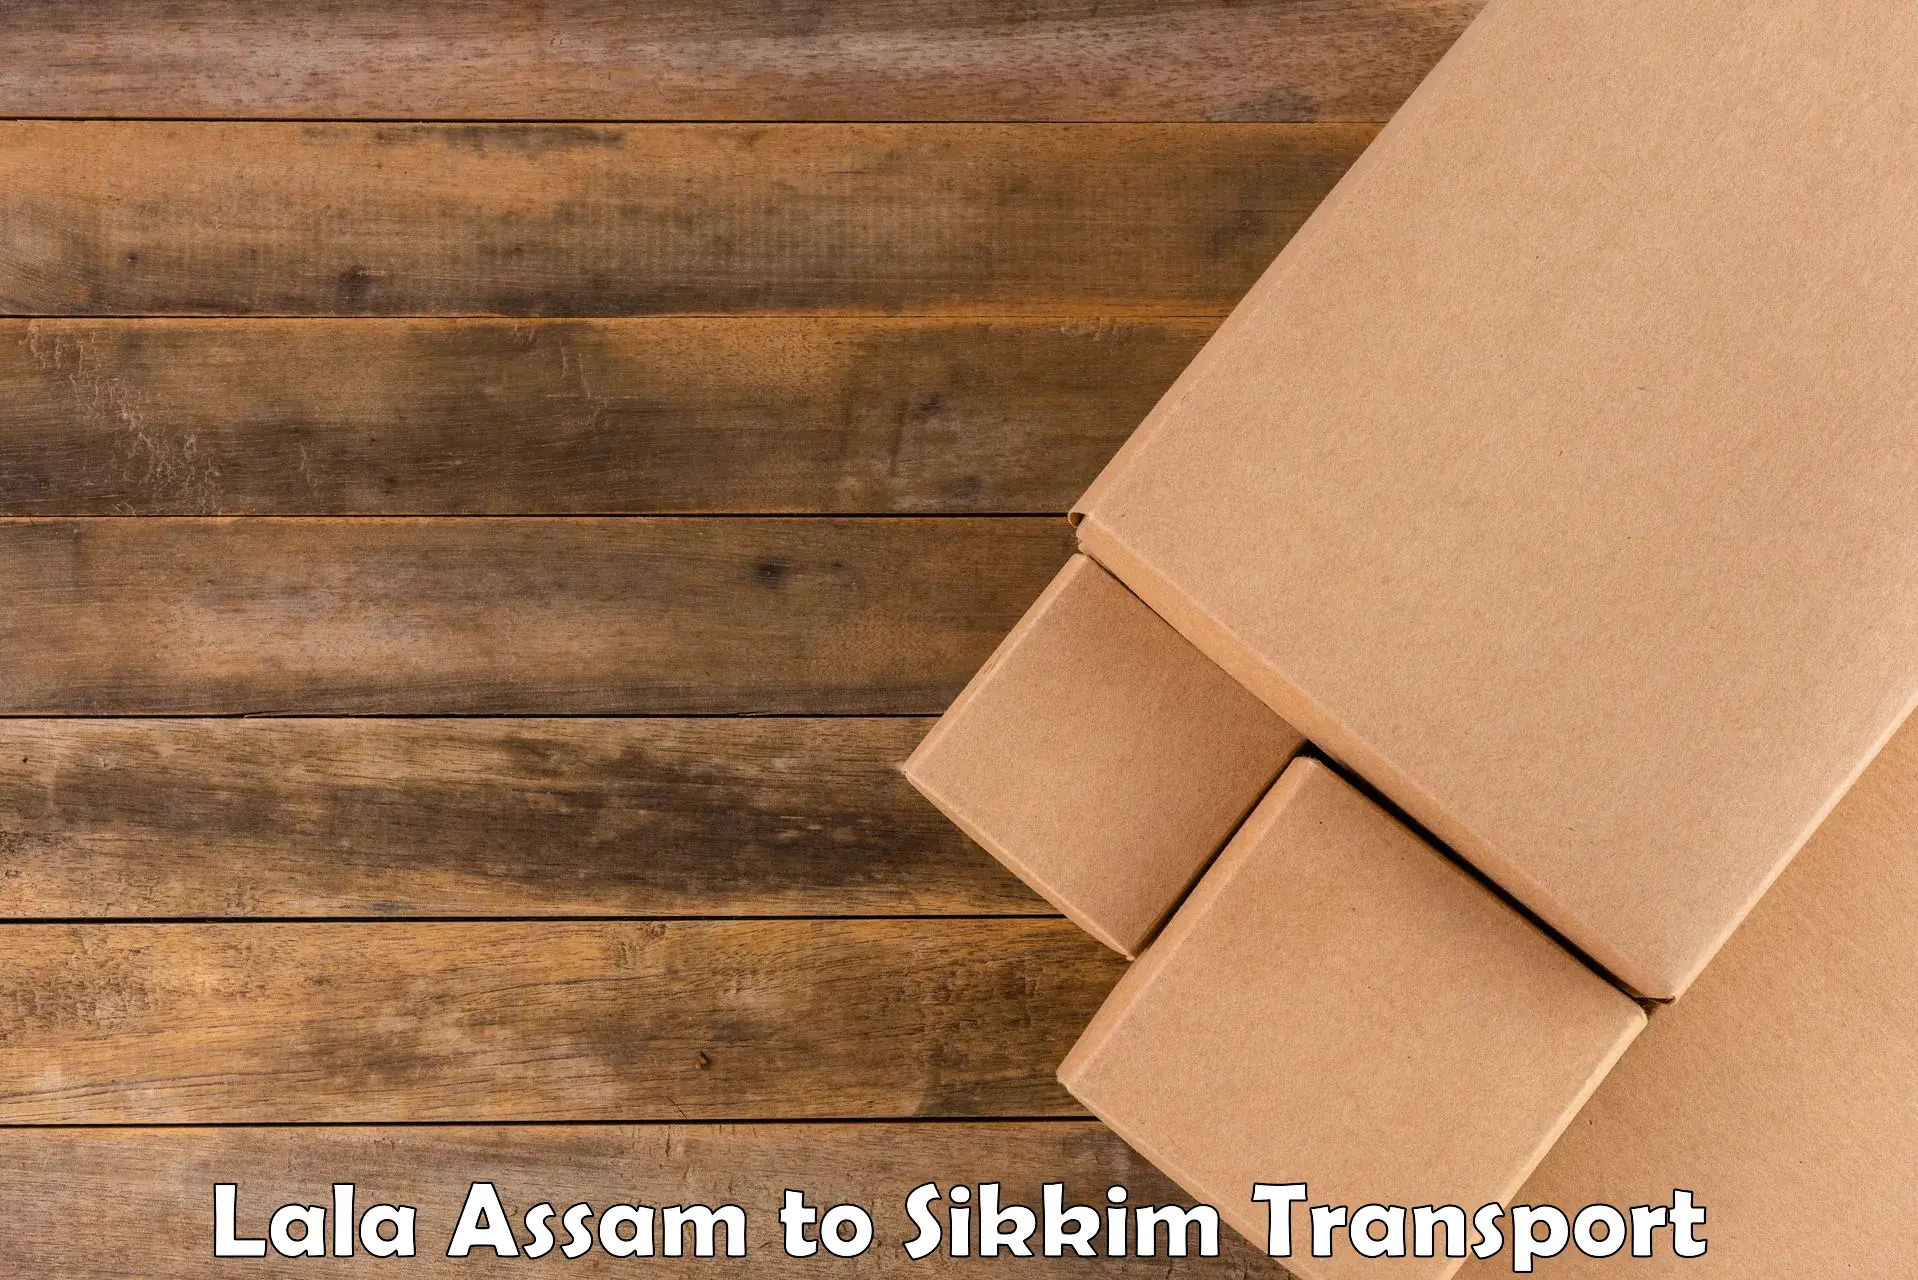 Express transport services Lala Assam to Jorethang